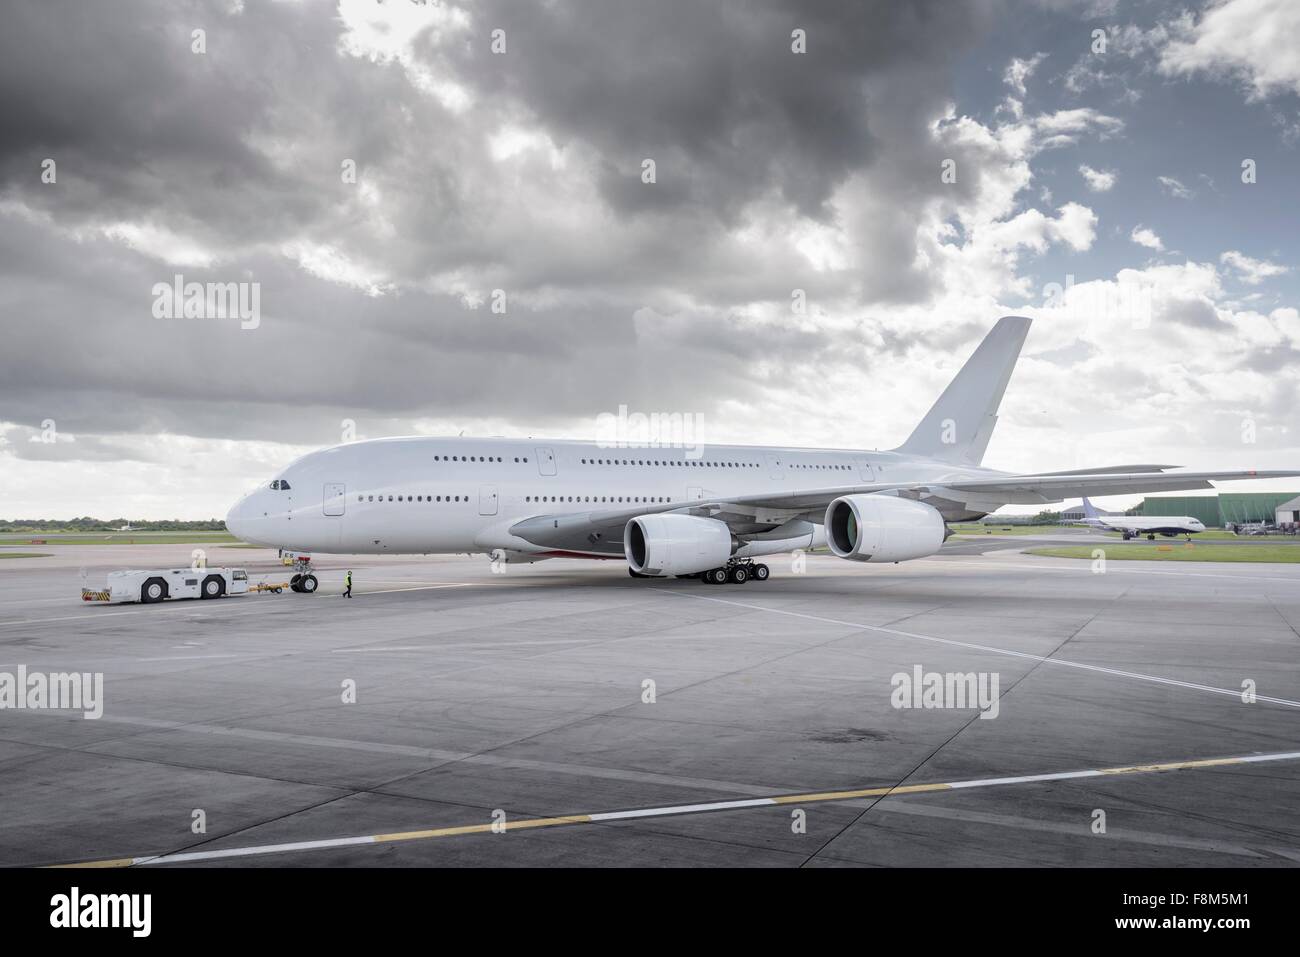 Towing tug moving A380 aircraft onto runway Stock Photo